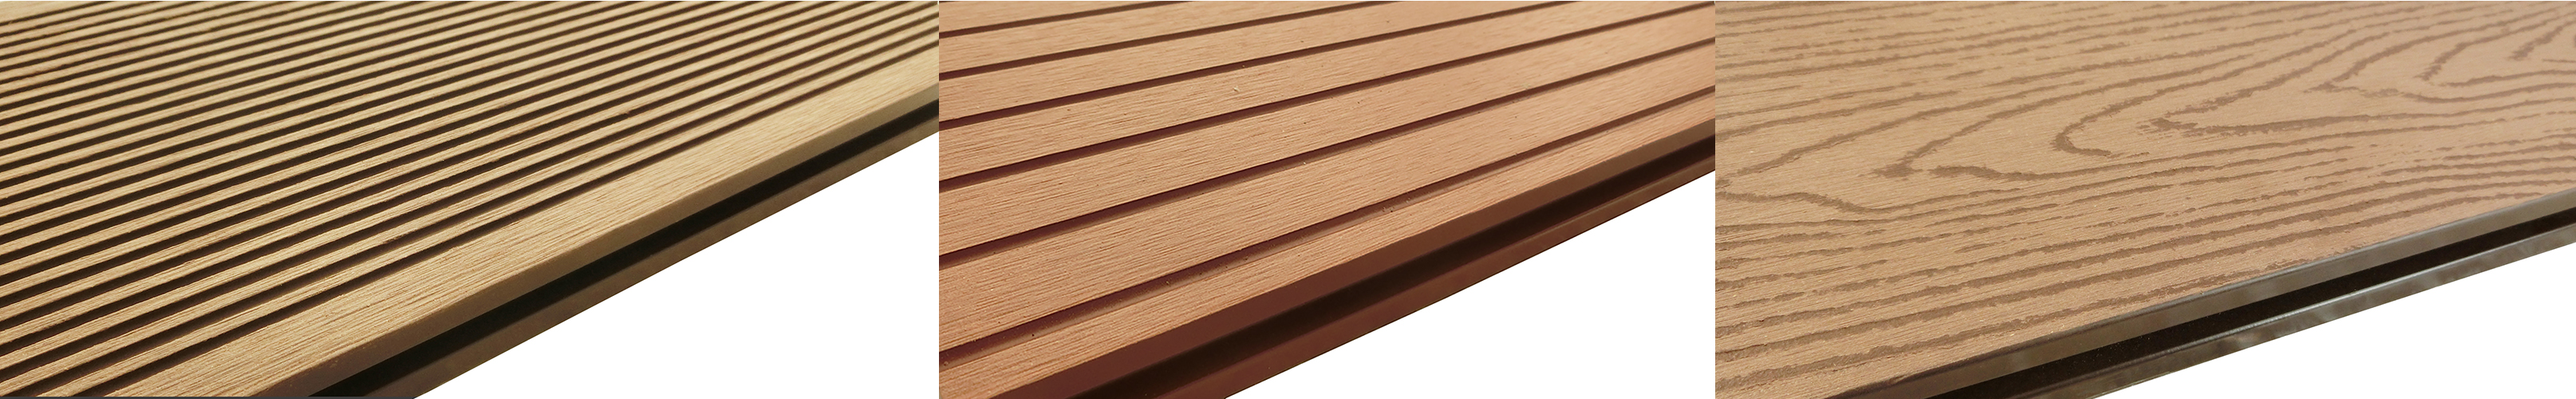 affordable composite deck boards